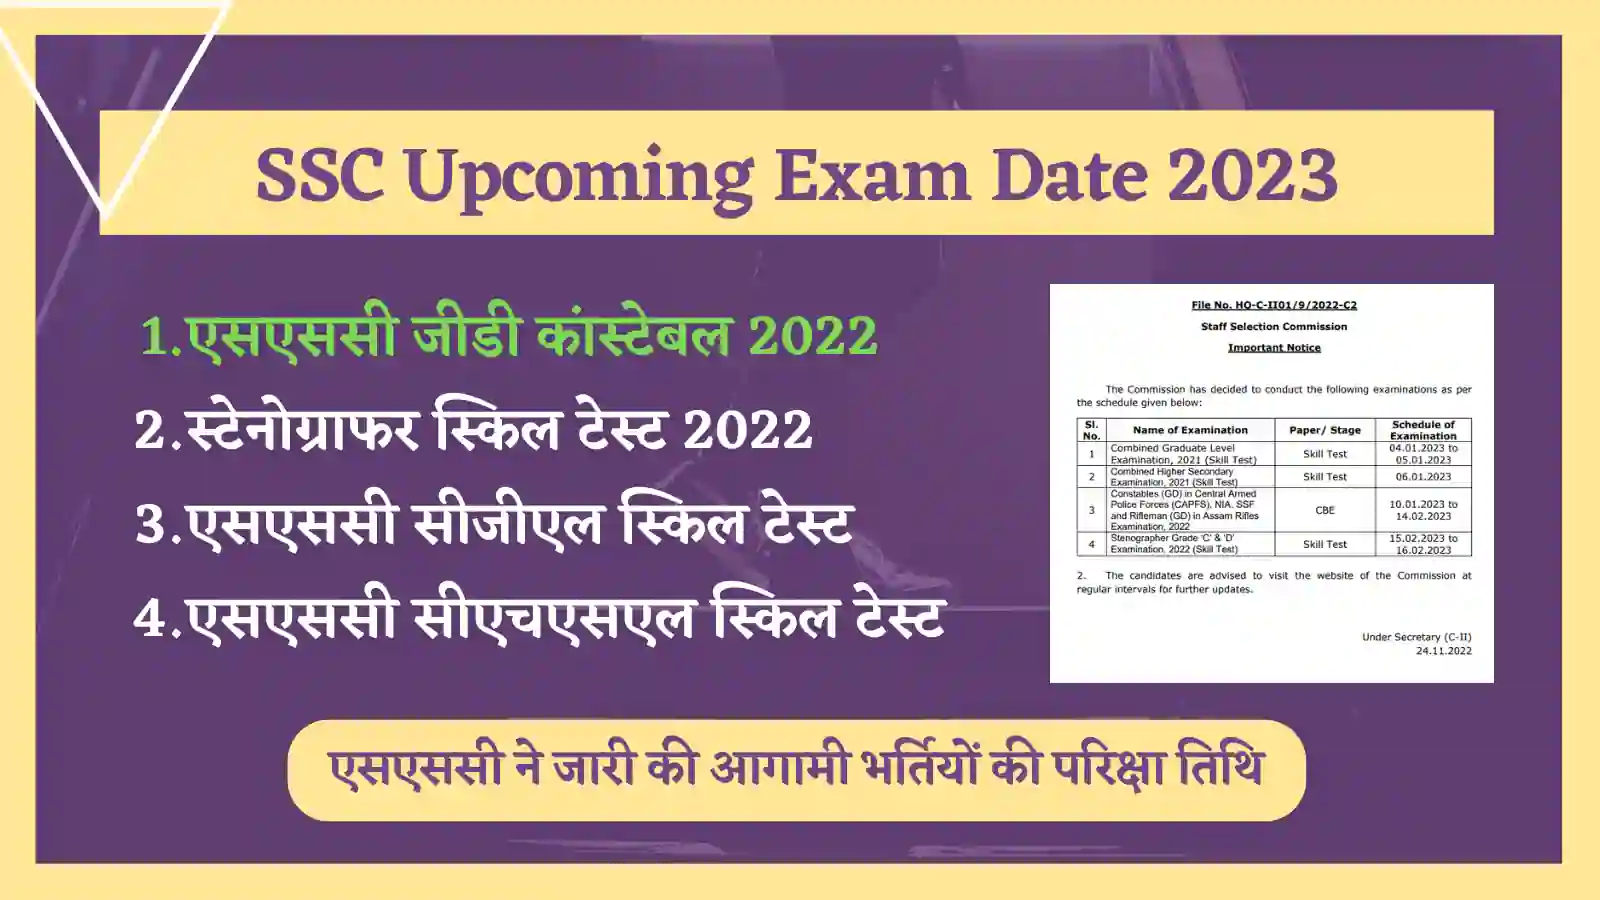 ssc upcoming exam date 2023